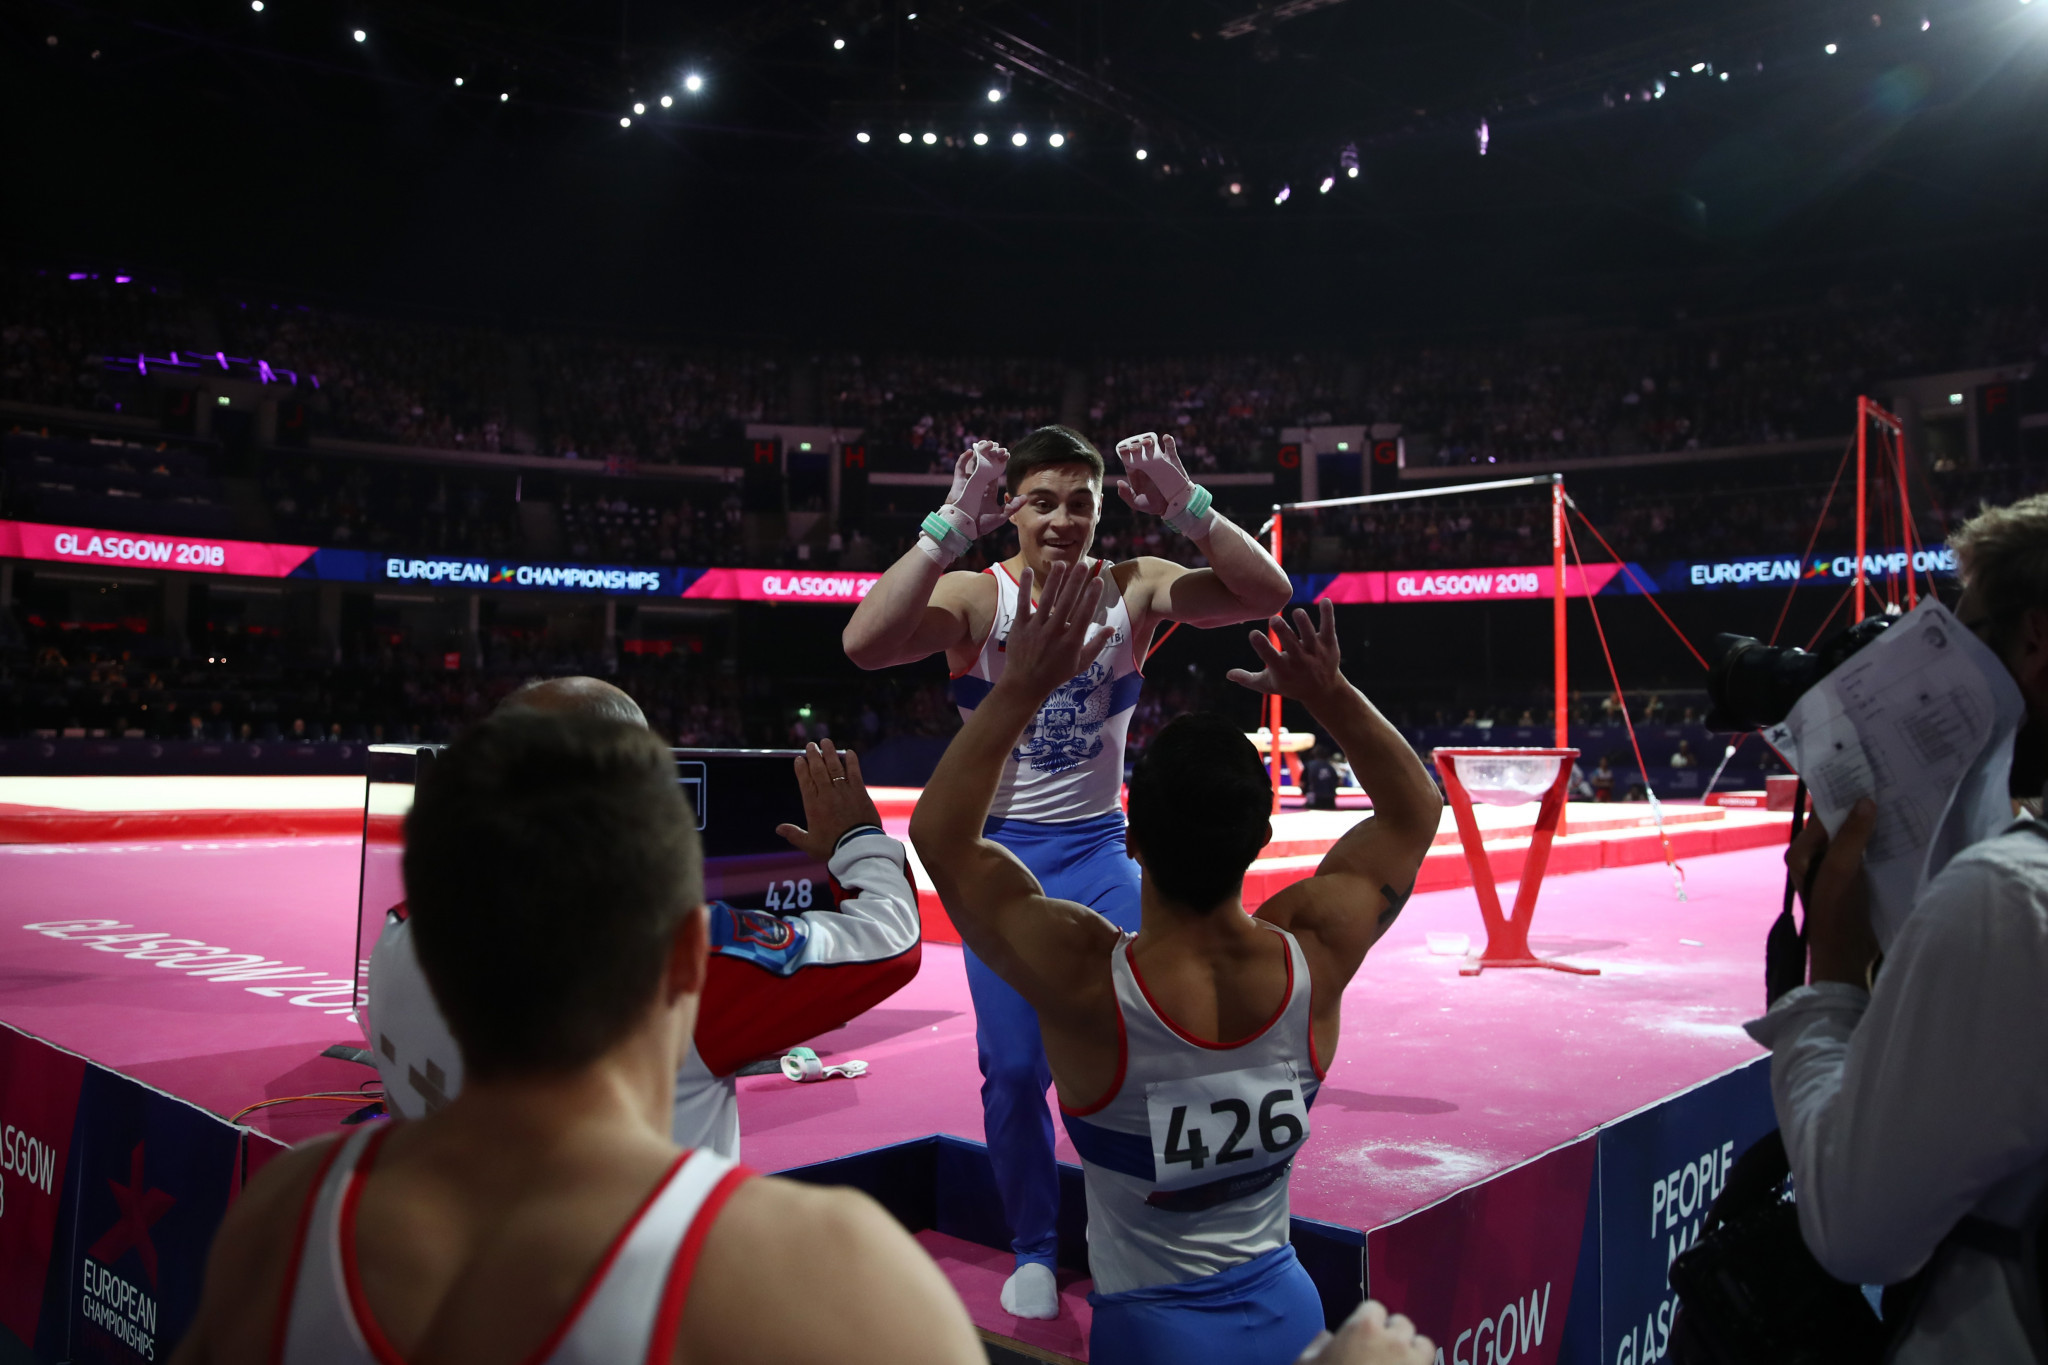 Russia clinch third straight European Championships men's team gymnastics crown after holding off Britain